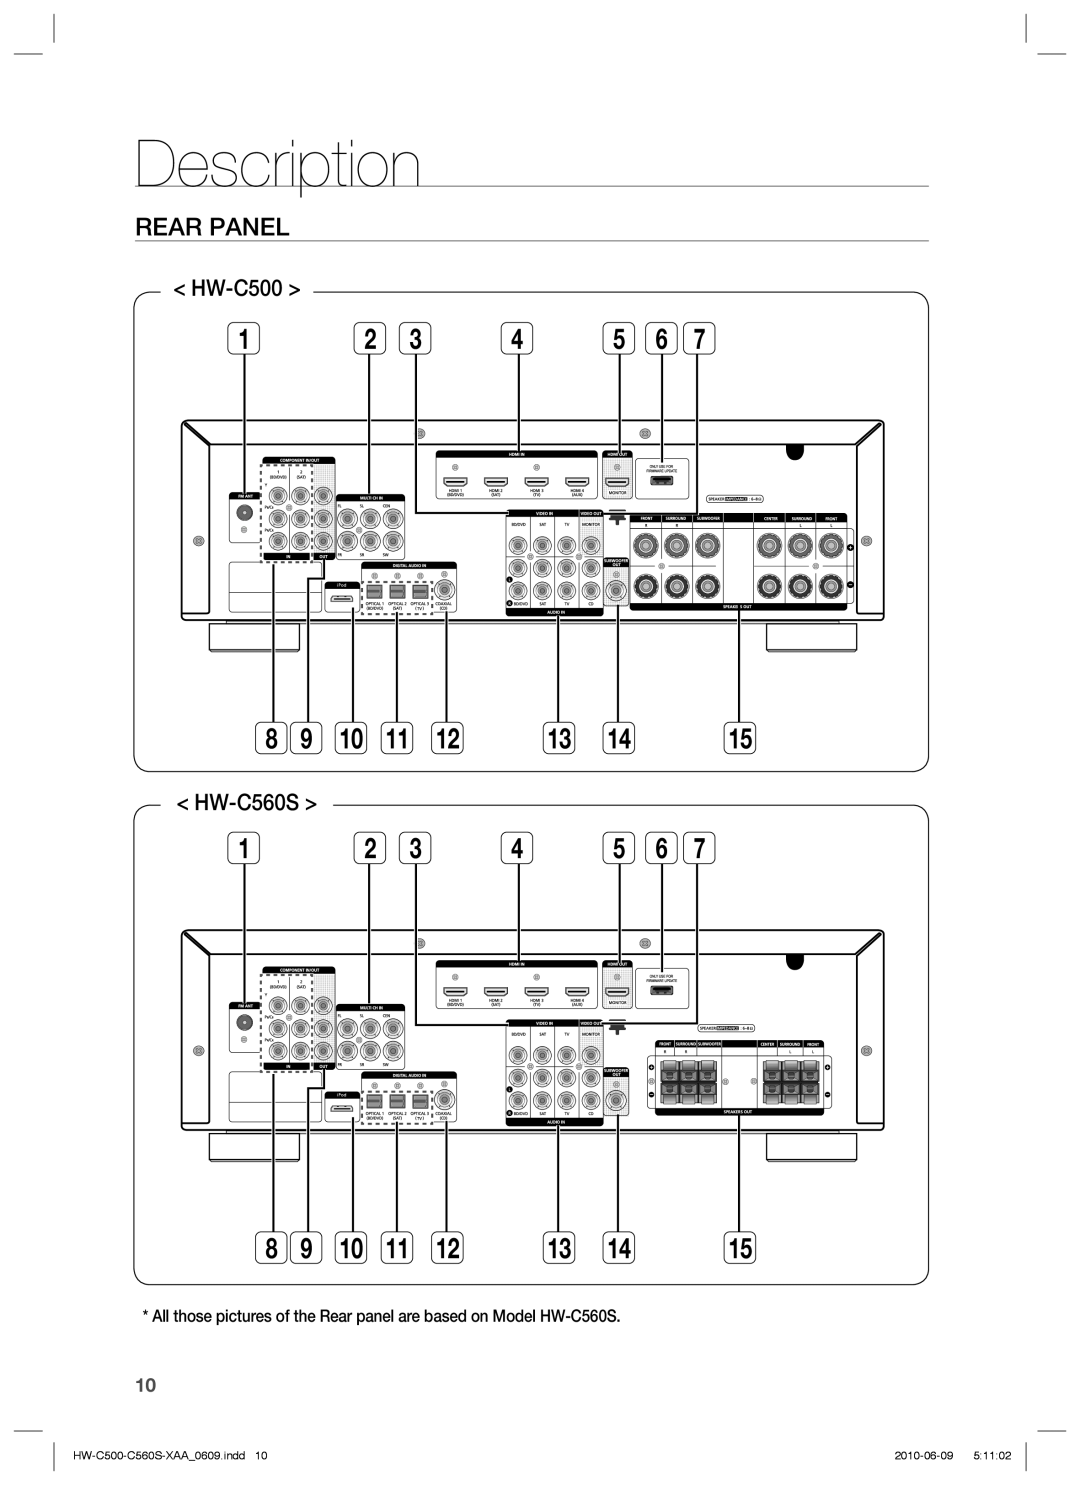 Samsung HW-C500, HW-C560S user manual Rear Panel, Description 